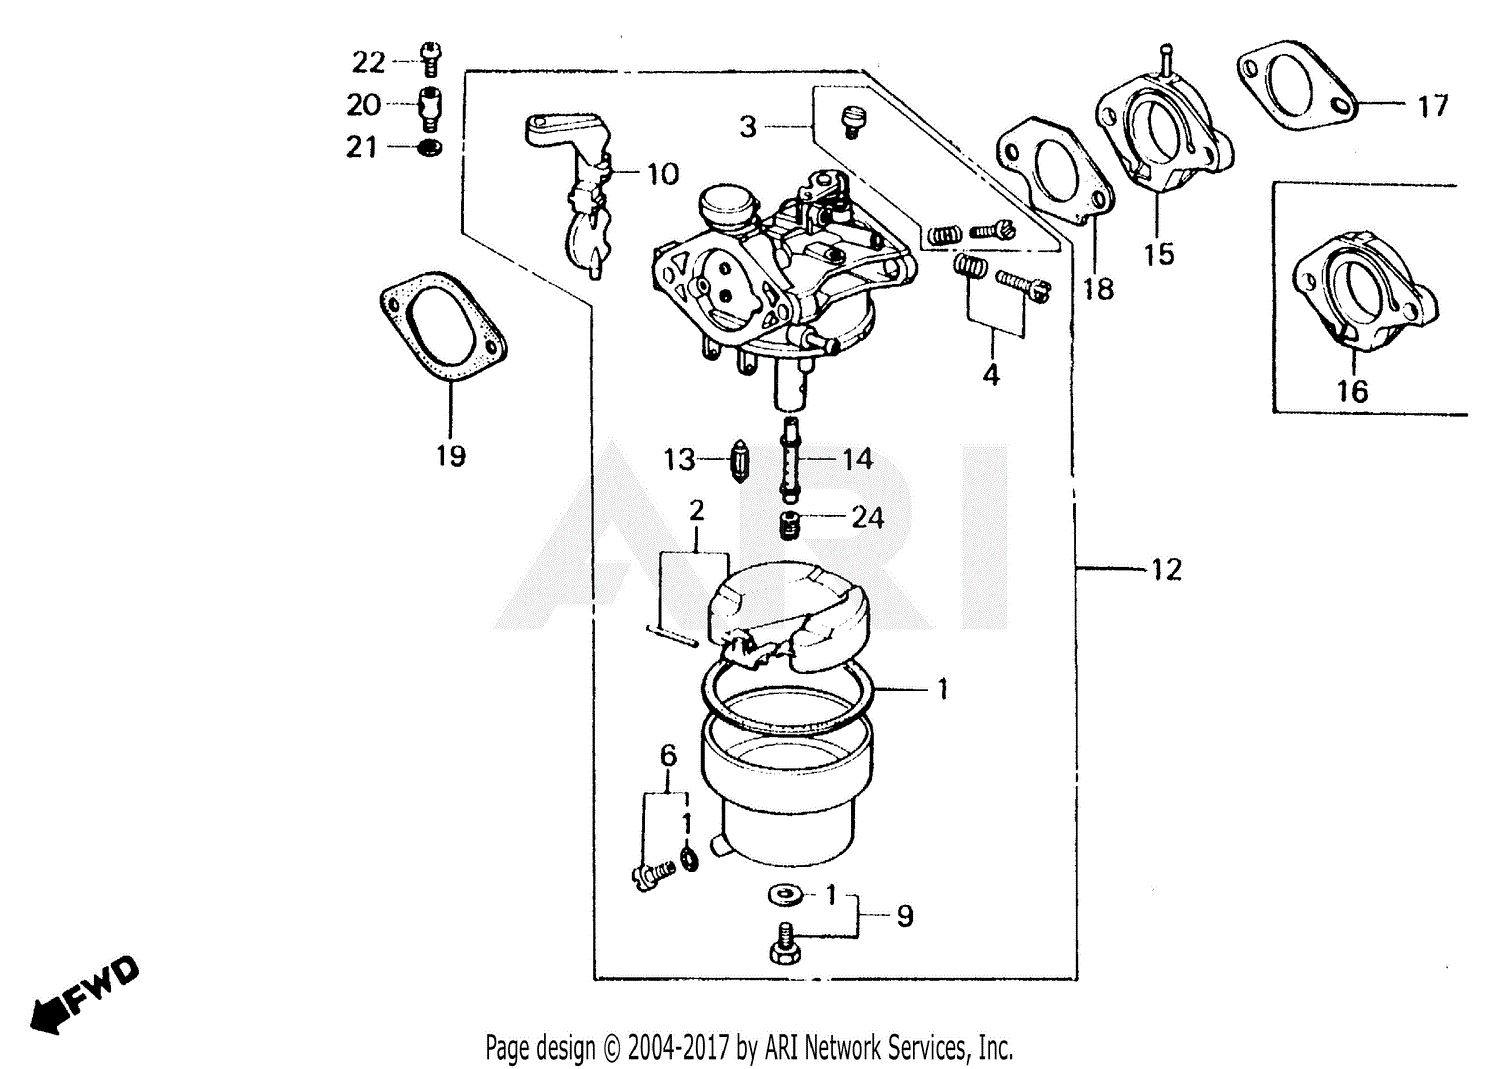 honda gx240 wiring diagram